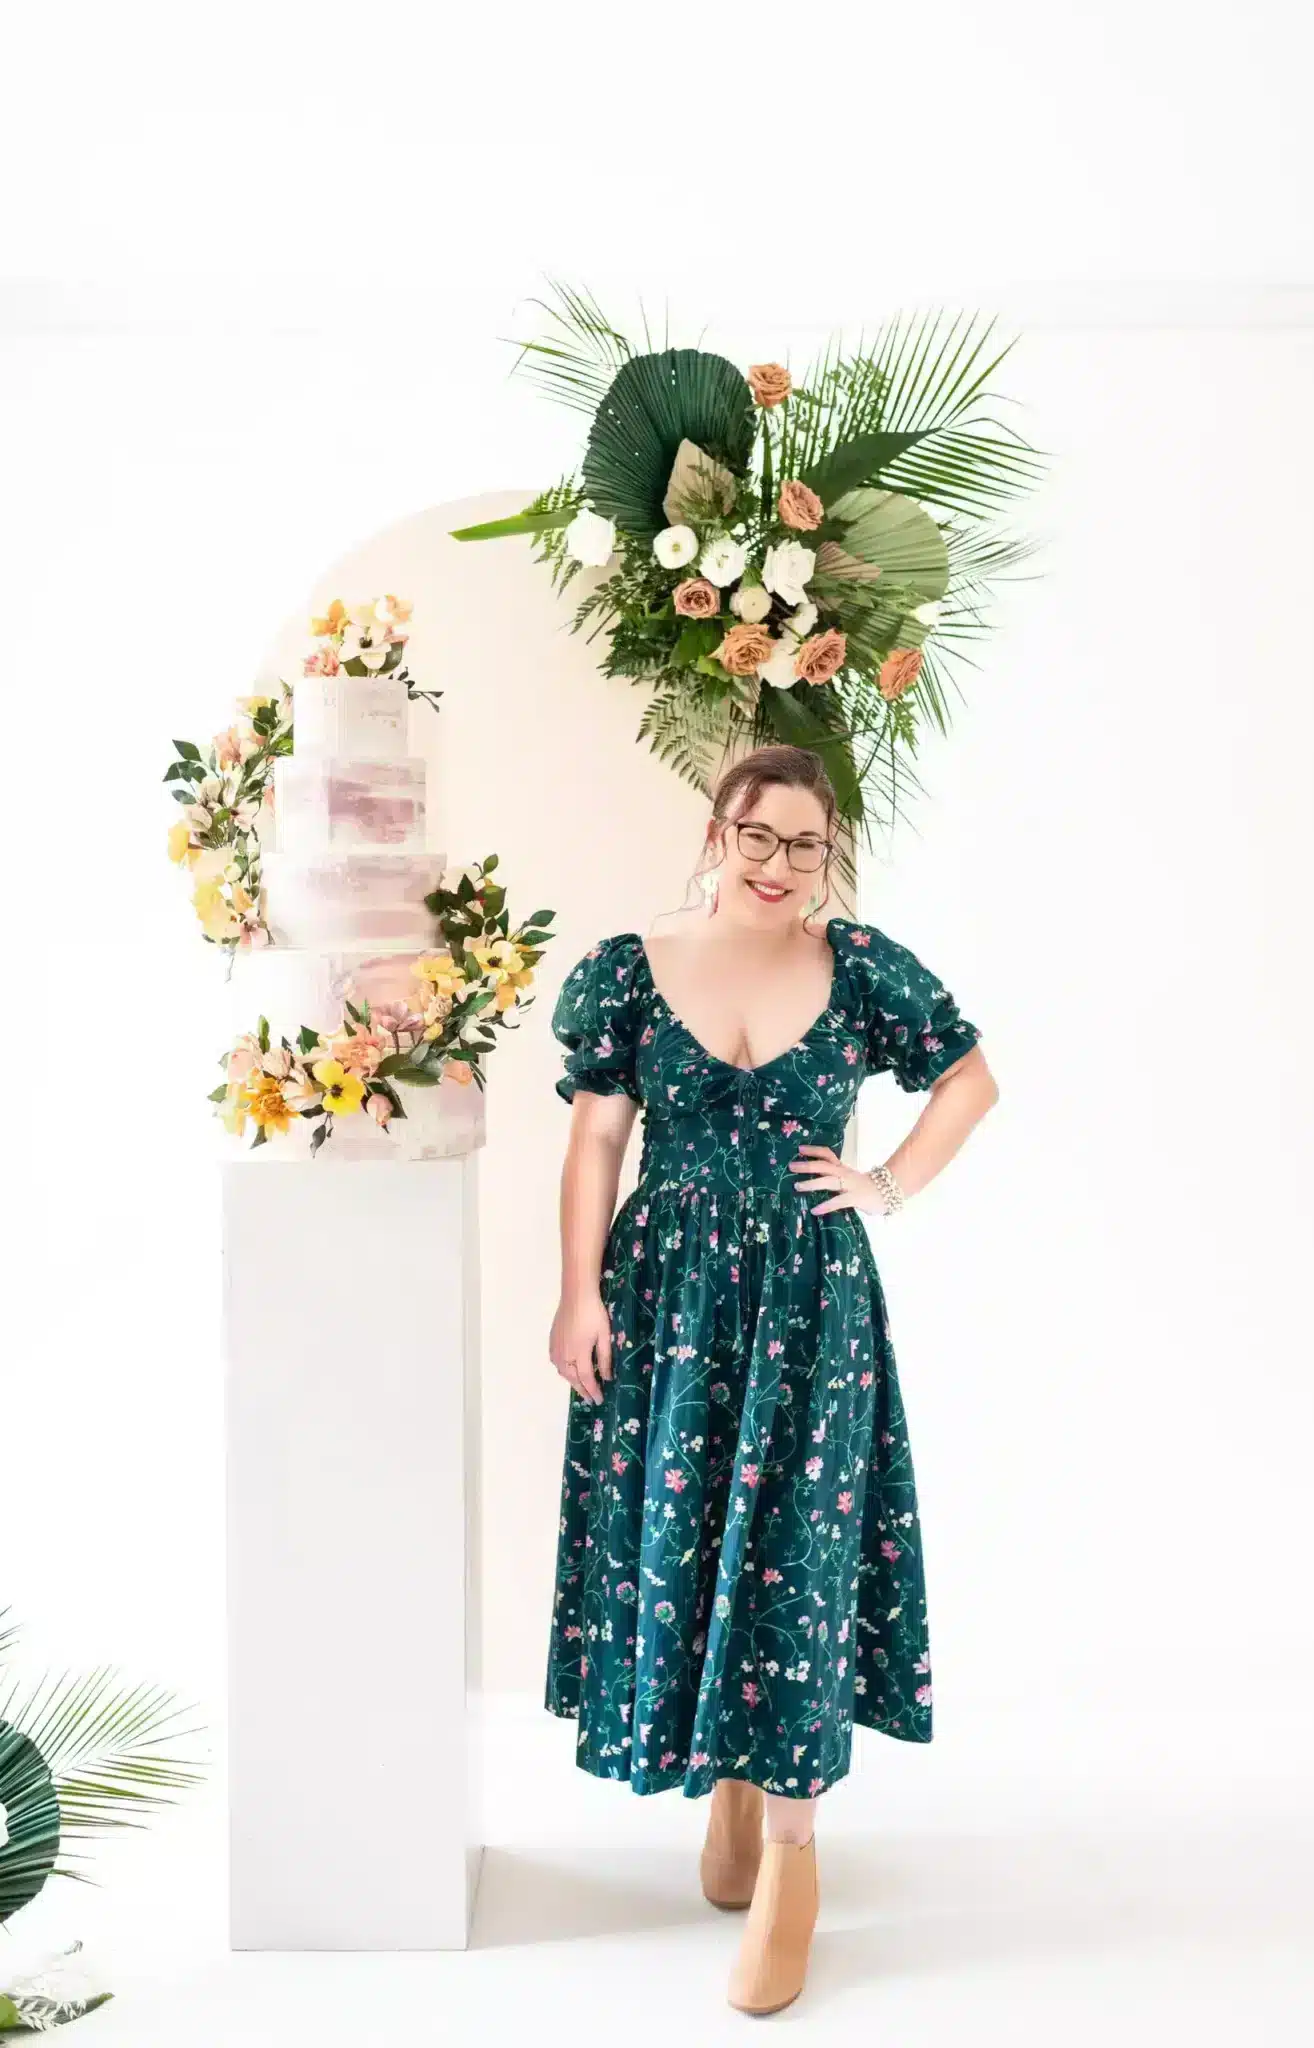 sugar artist standing next to wedding cake with sugar flowers